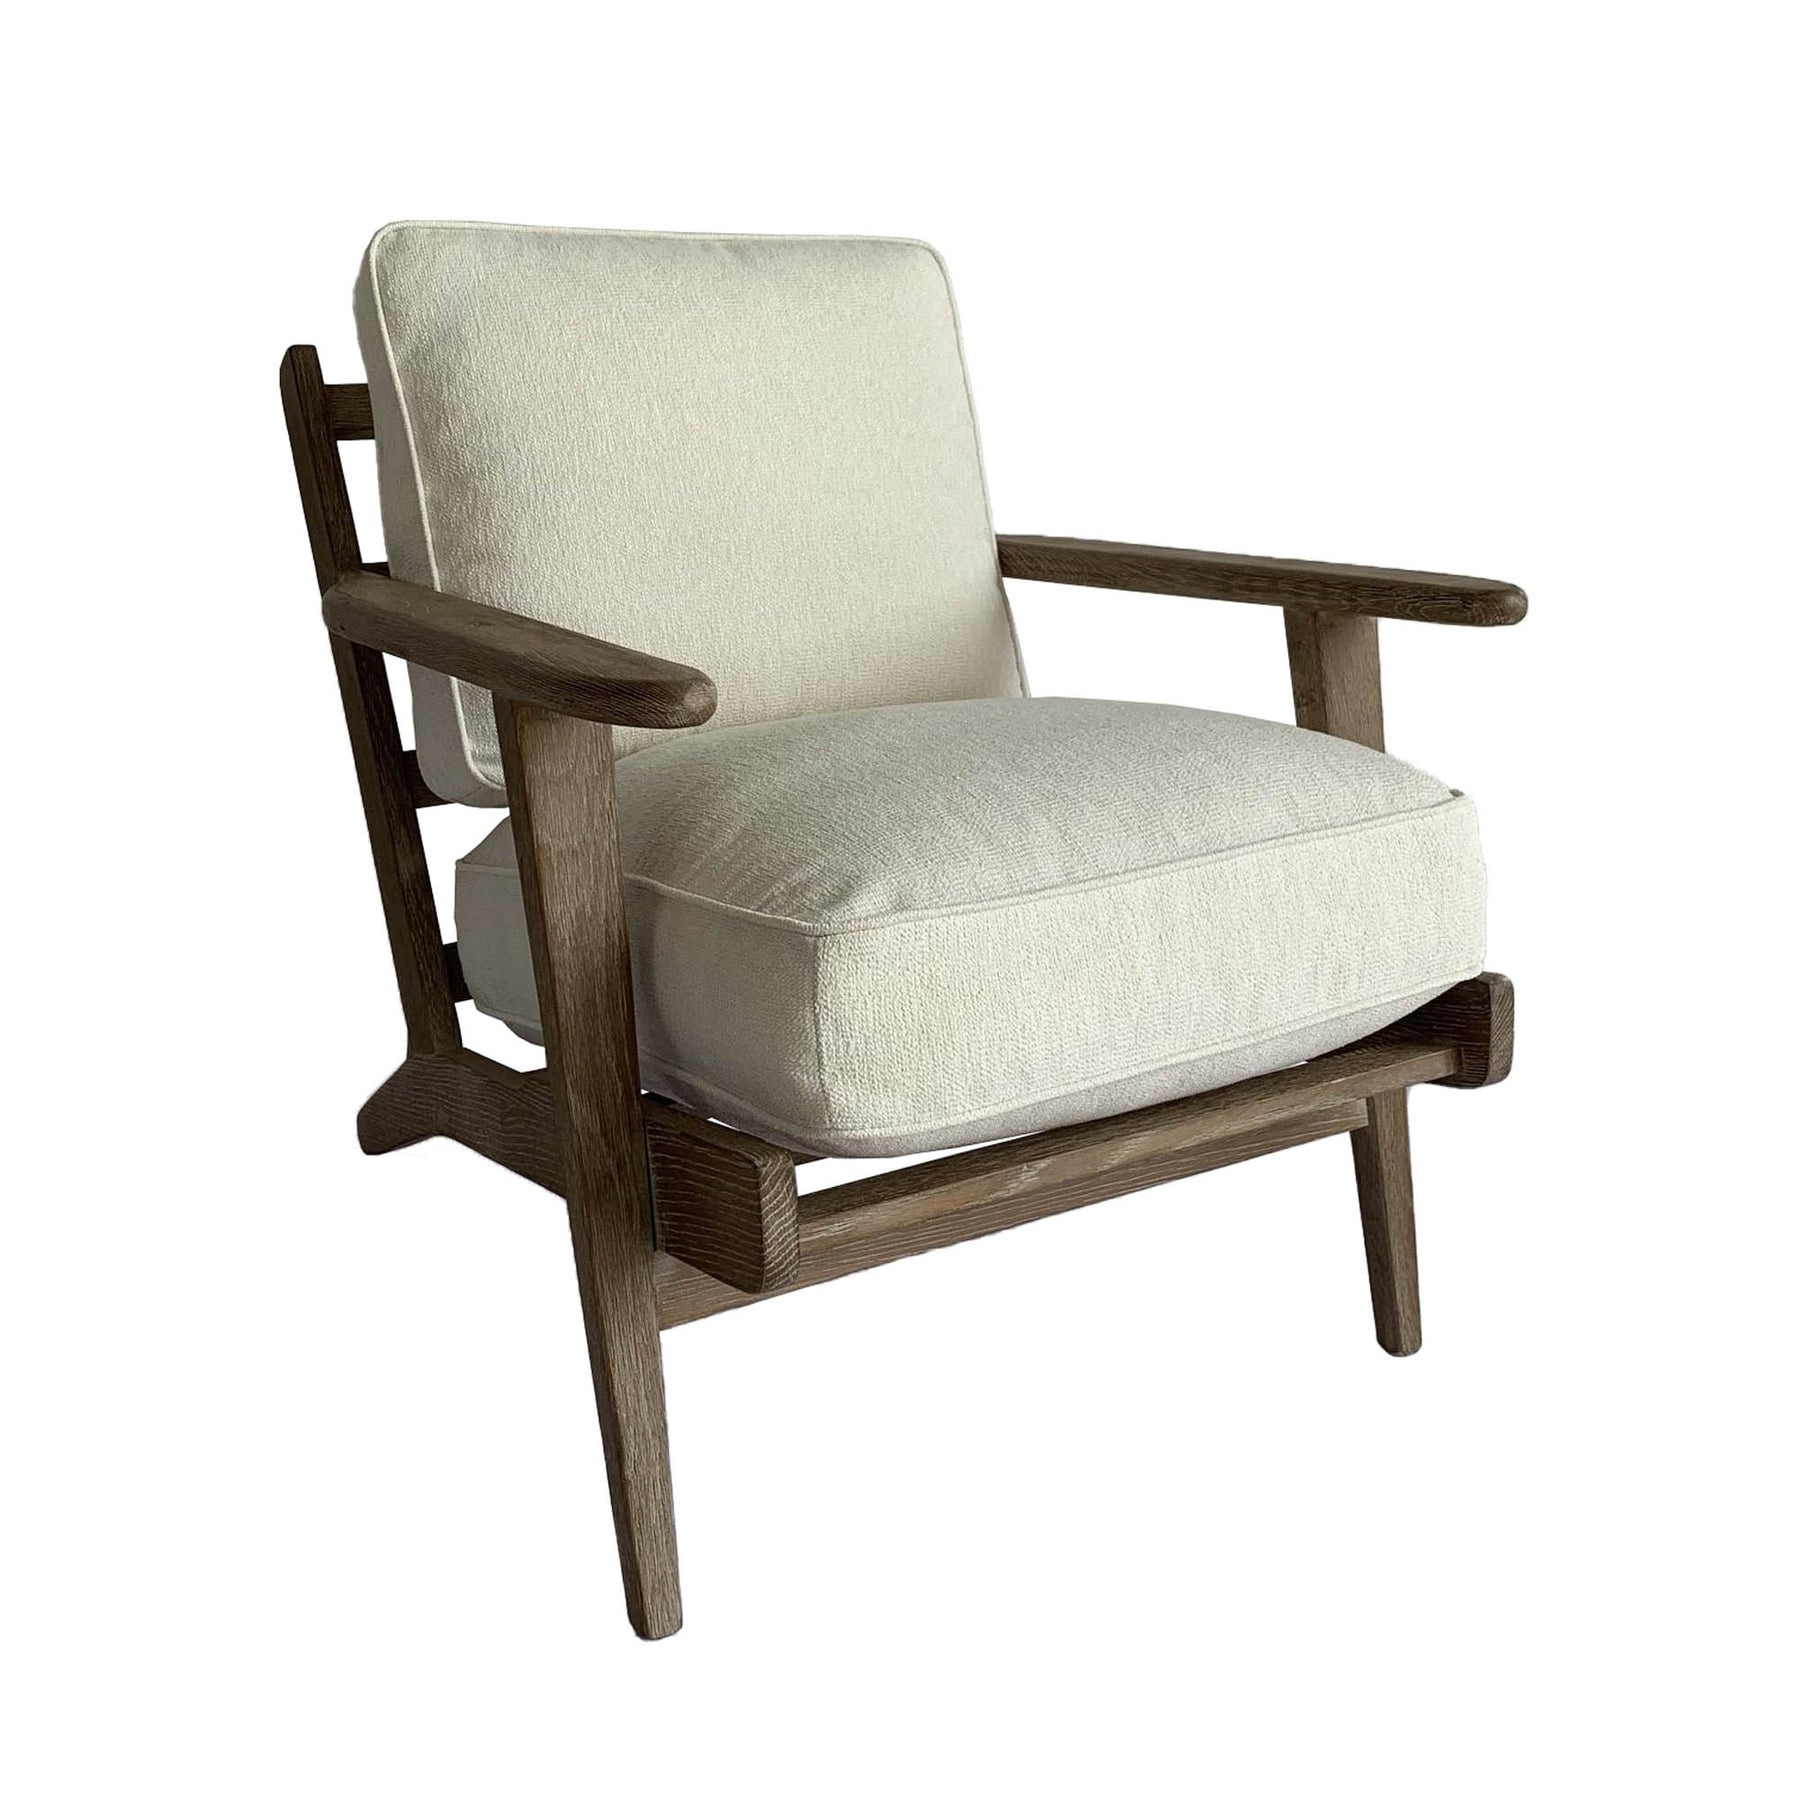 Plush Yale Lounge Chair - Performance White